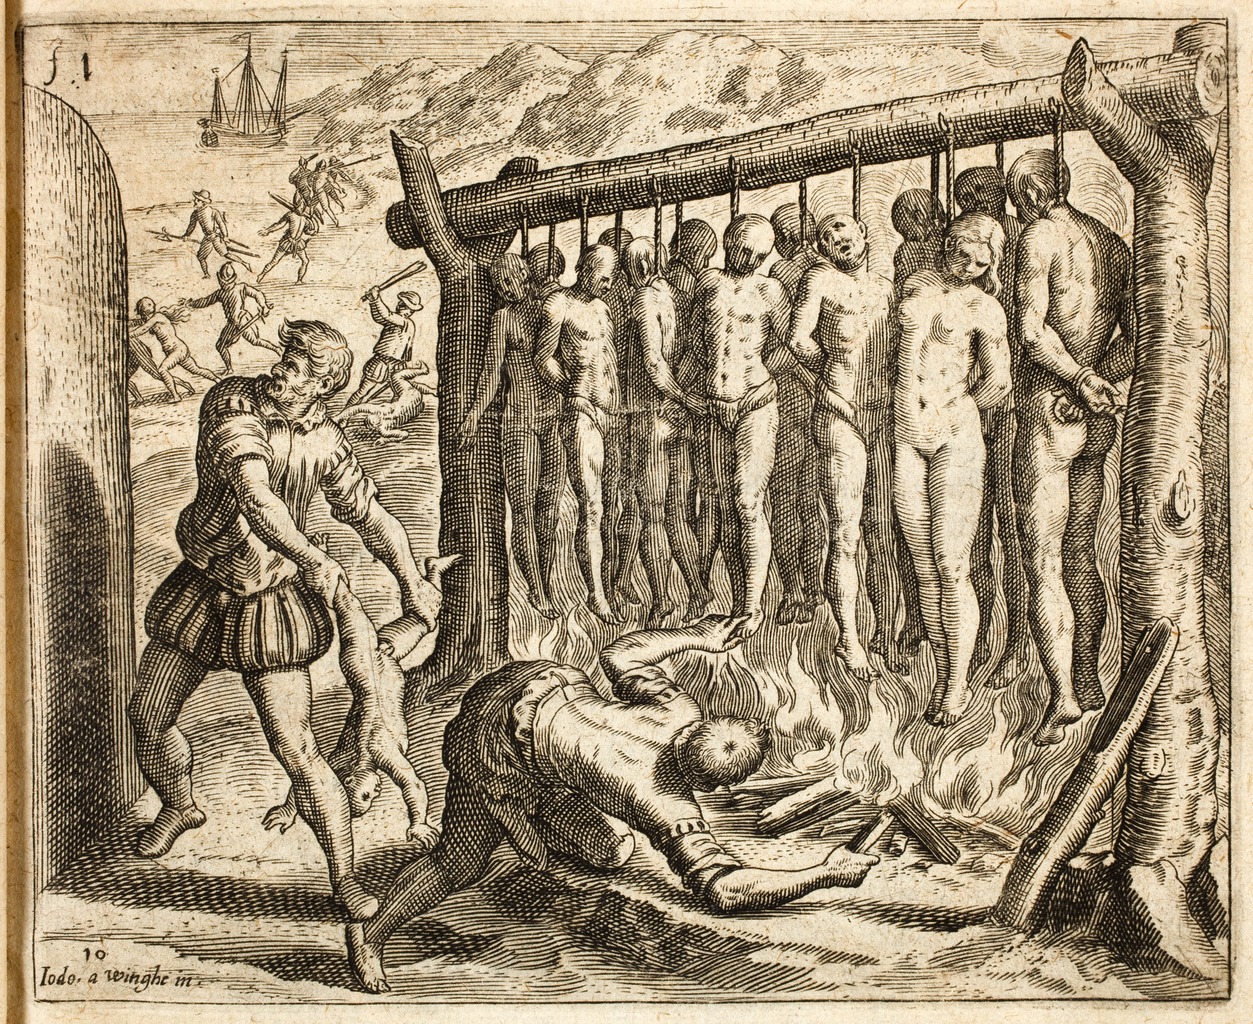 An illustration of Spanish cruelty in Cuba in an edition of Bartolomé de las Casas's 1552 work